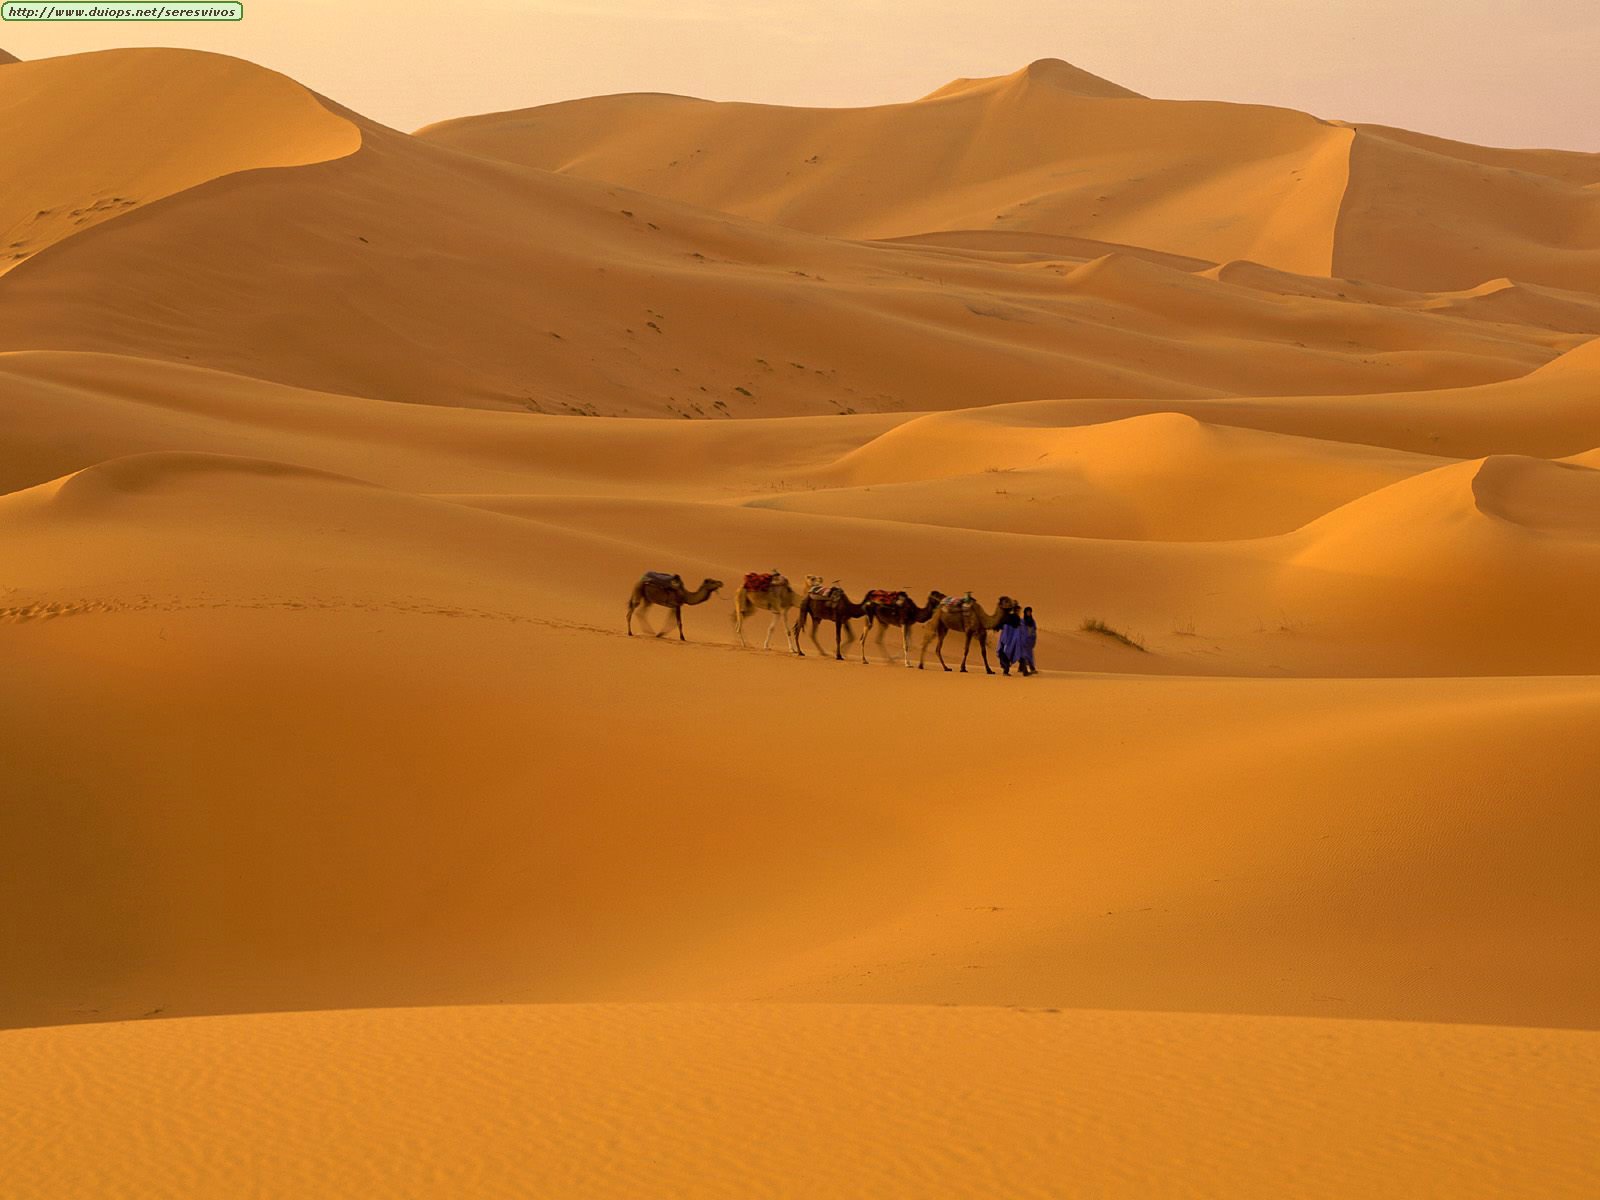 http://www.duiops.net/seresvivos/galeria/camellos/Travel_Africa_Sahara%20Desert,%20Morocco.jpg